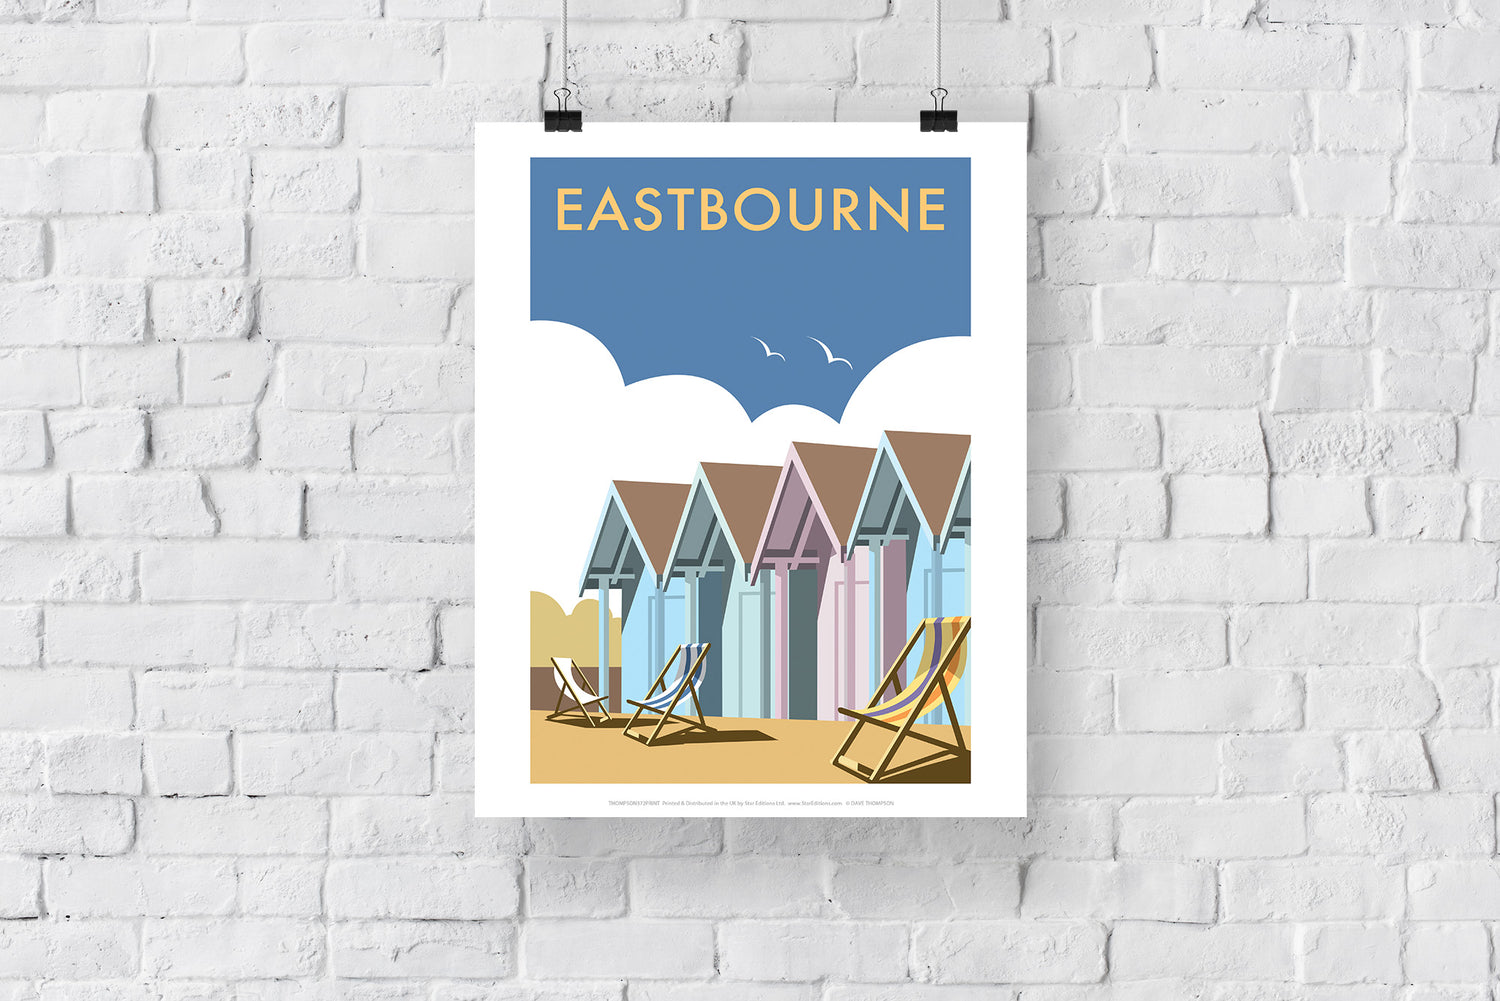 Eastbourne - Art Print